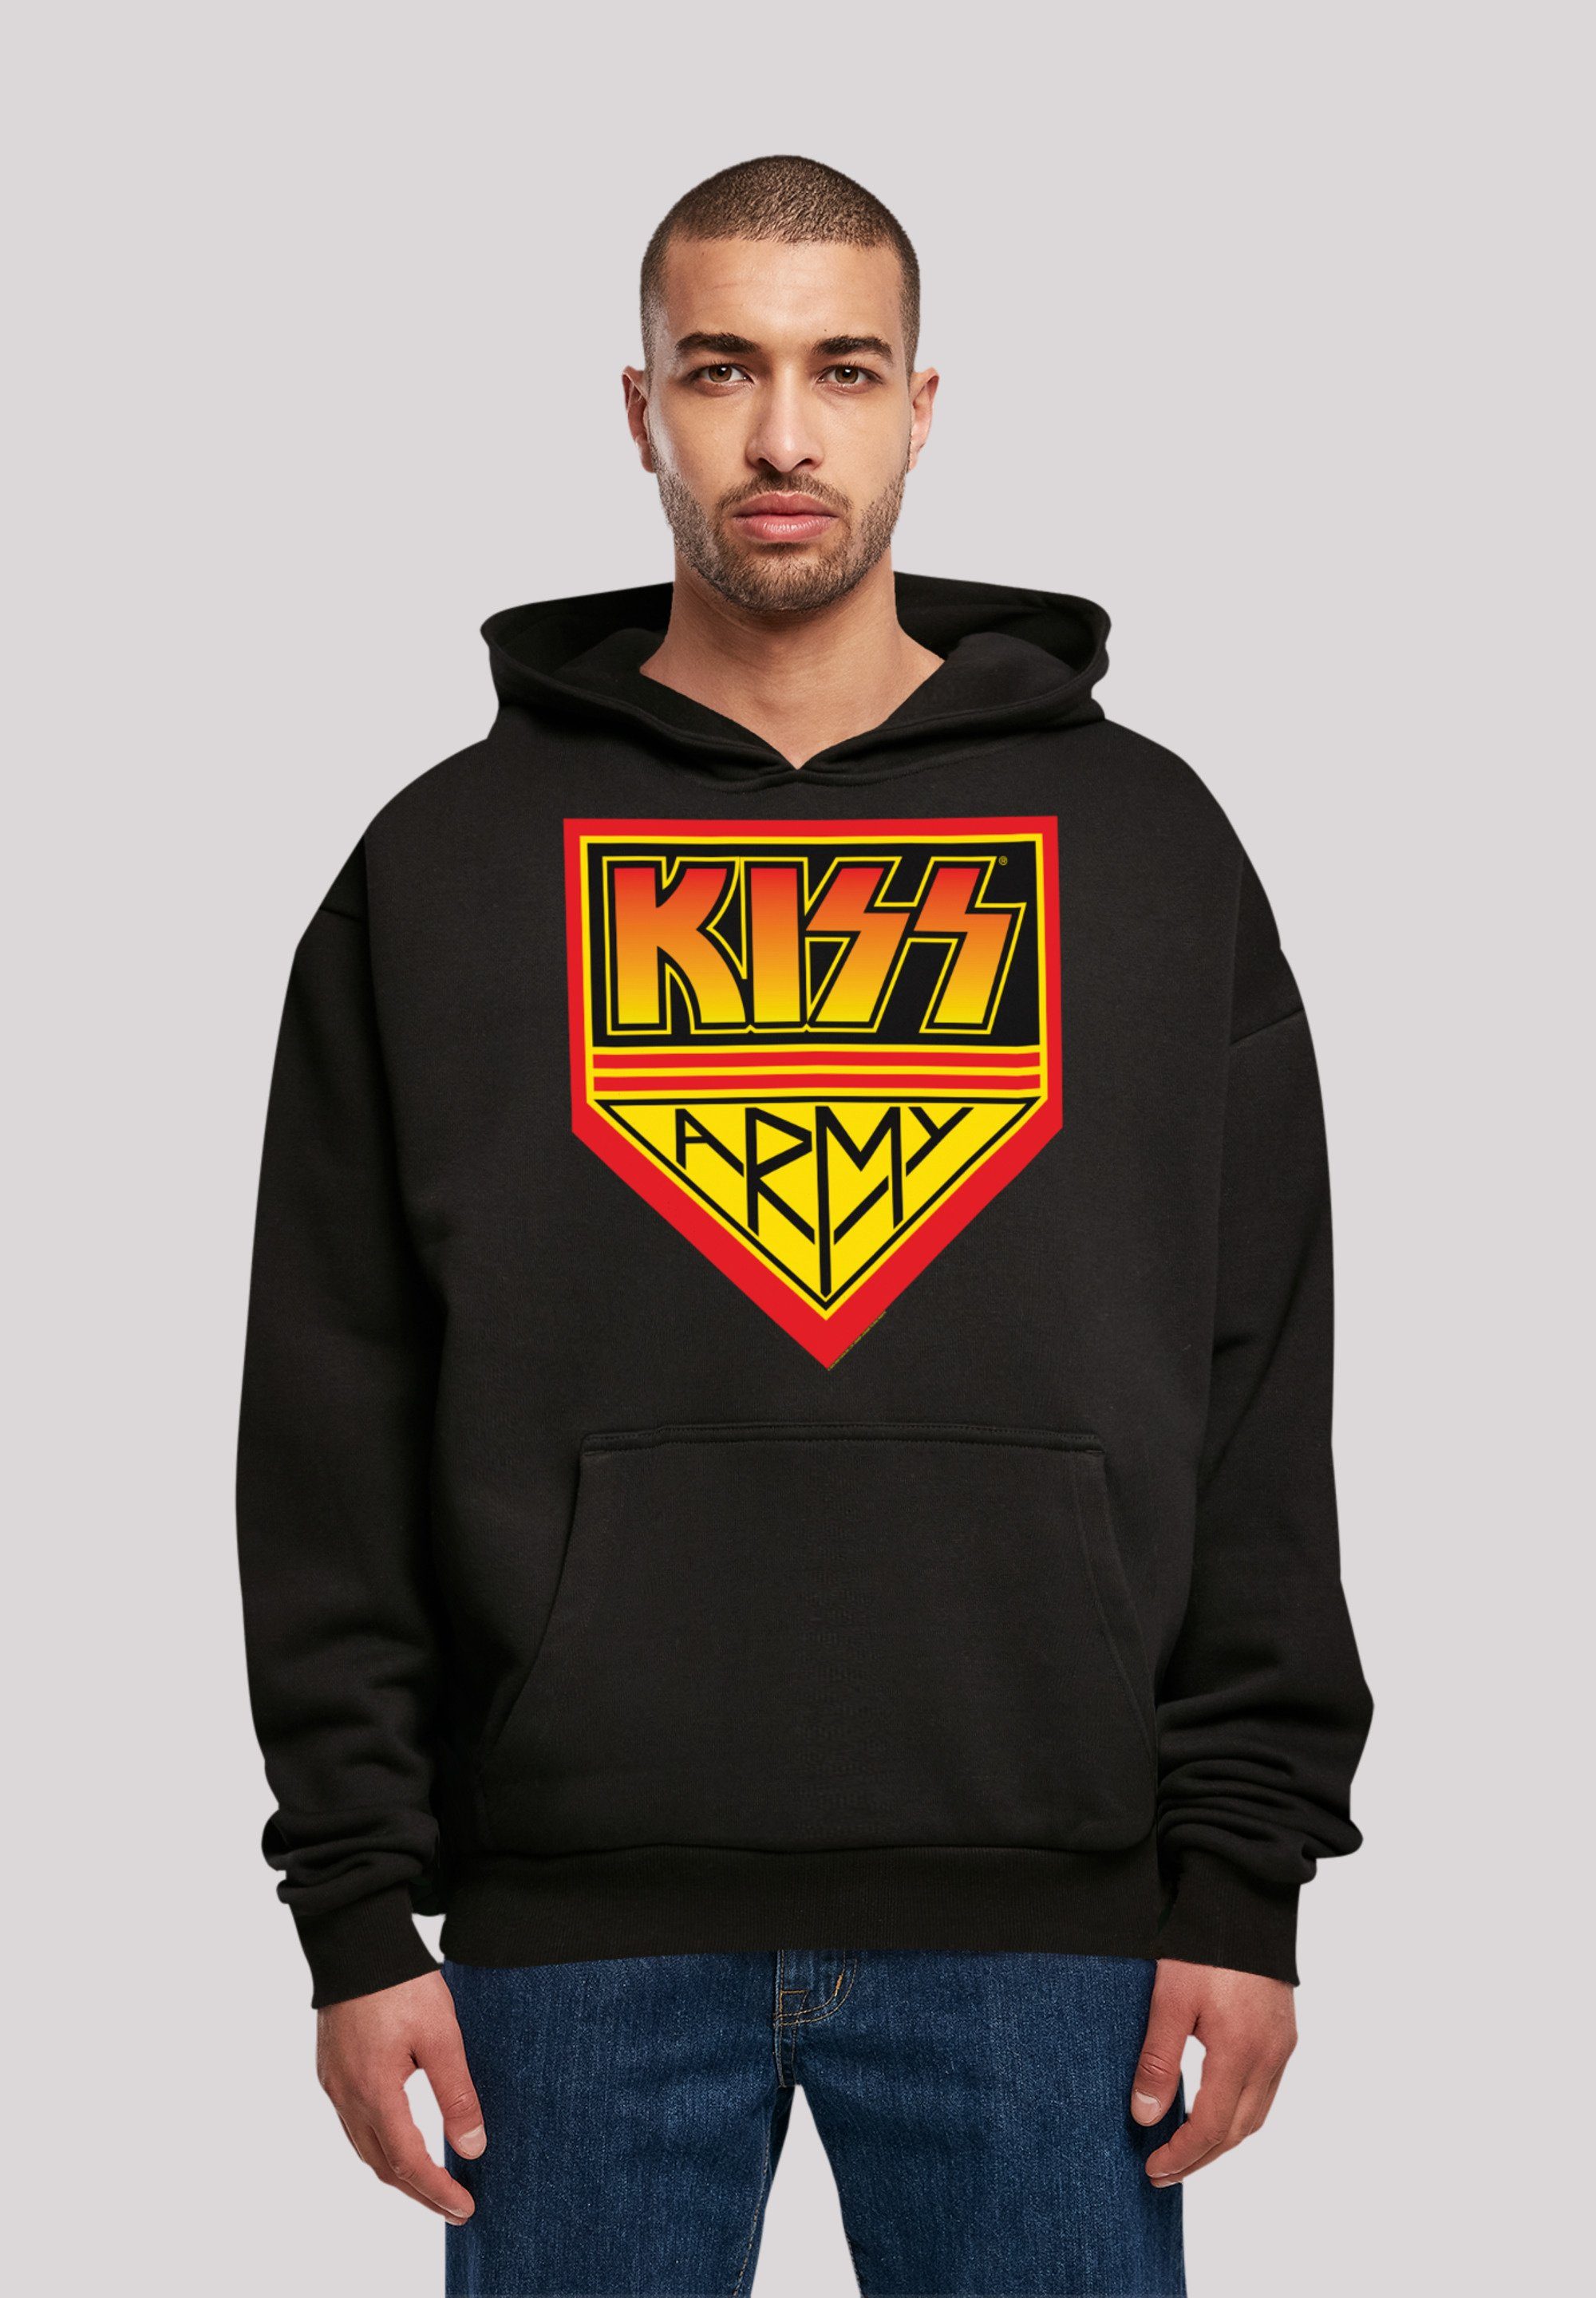 F4NT4STIC Hoodie Kiss Rock Band Army Logo Premium Qualität, Musik, By Rock Off schwarz